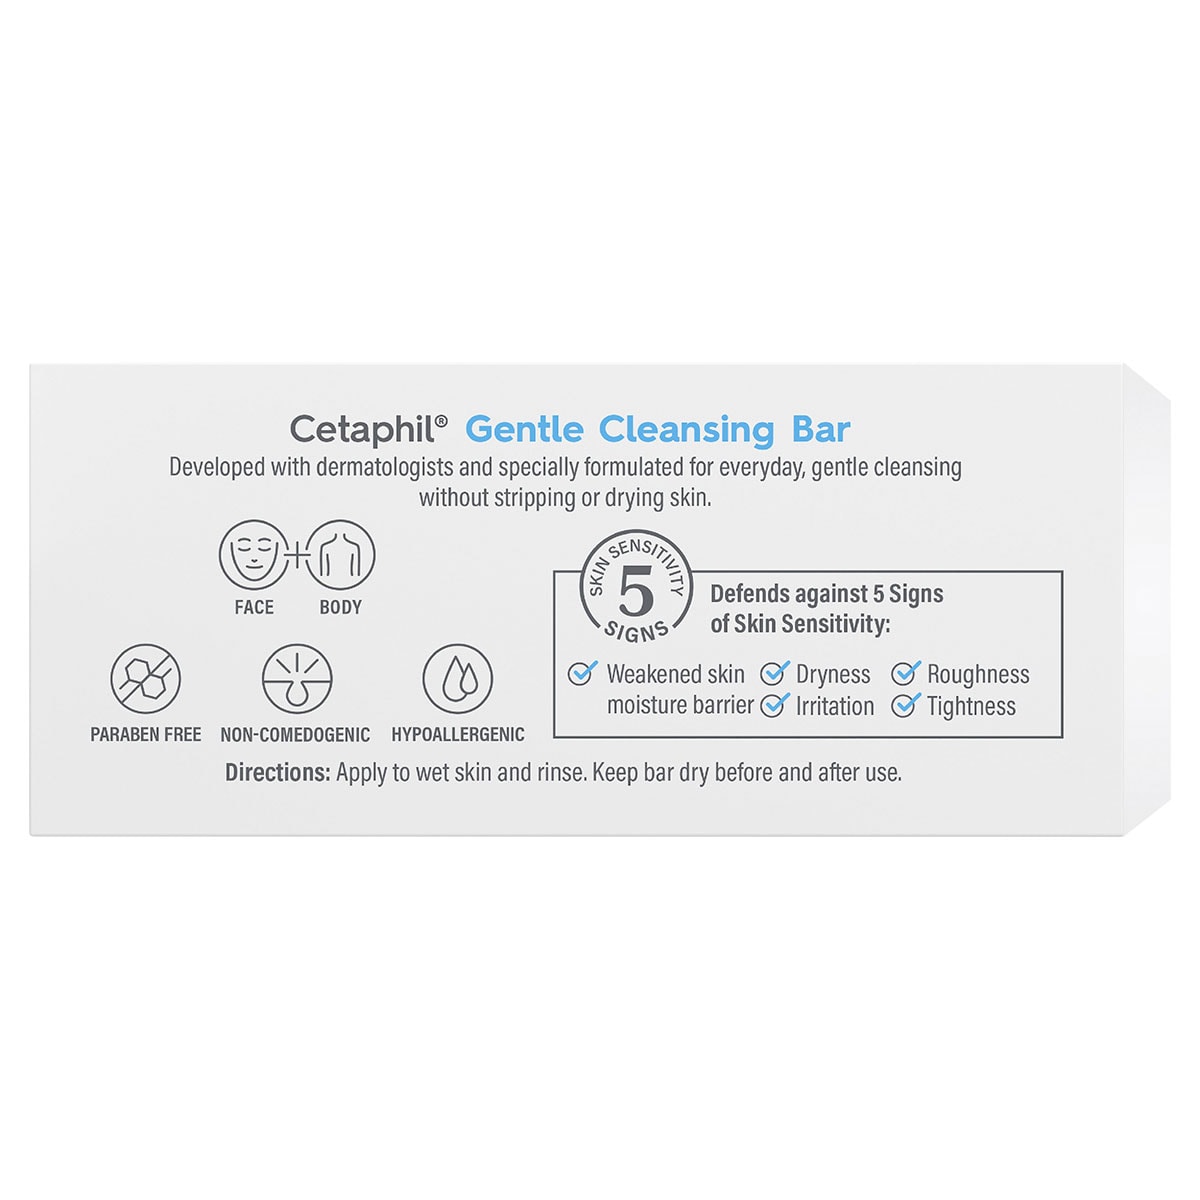 Cetaphil Gentle Cleansing Bar 127g